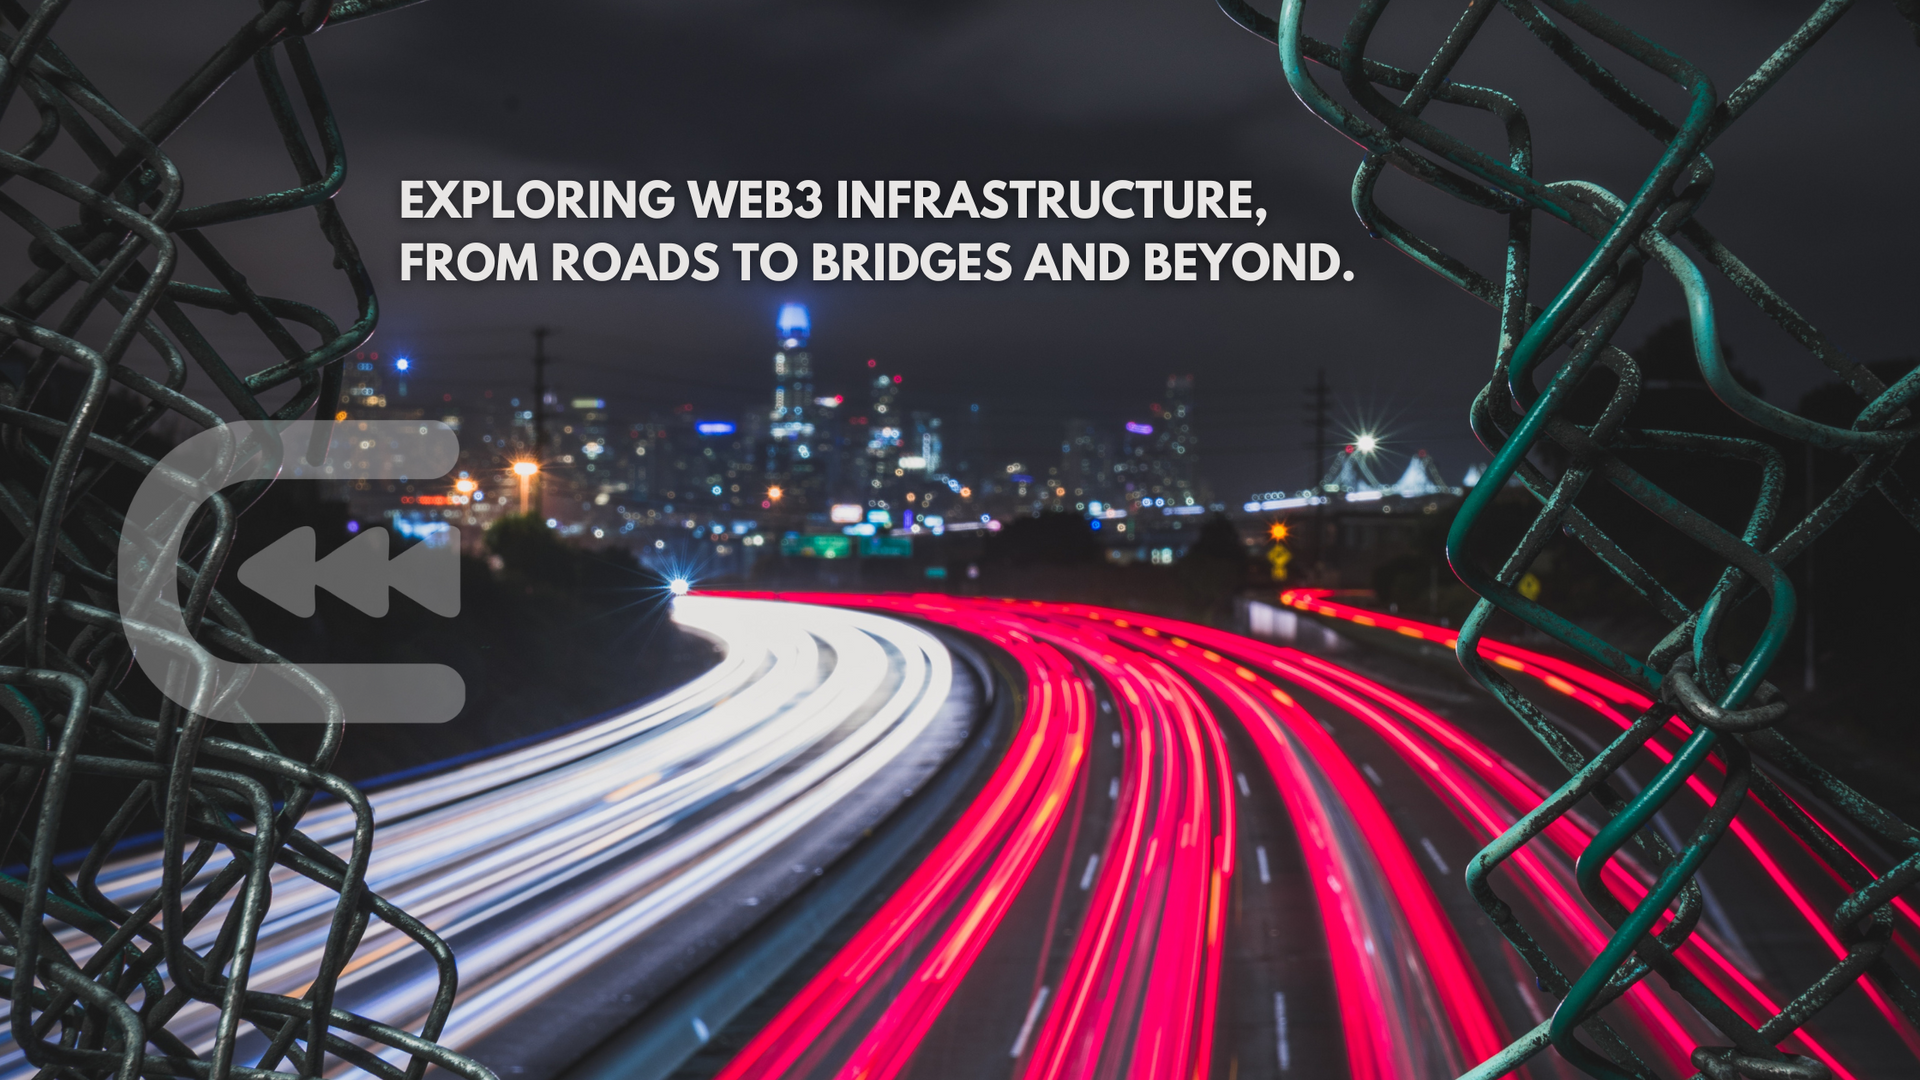 Exploring Web3 infrastructure.